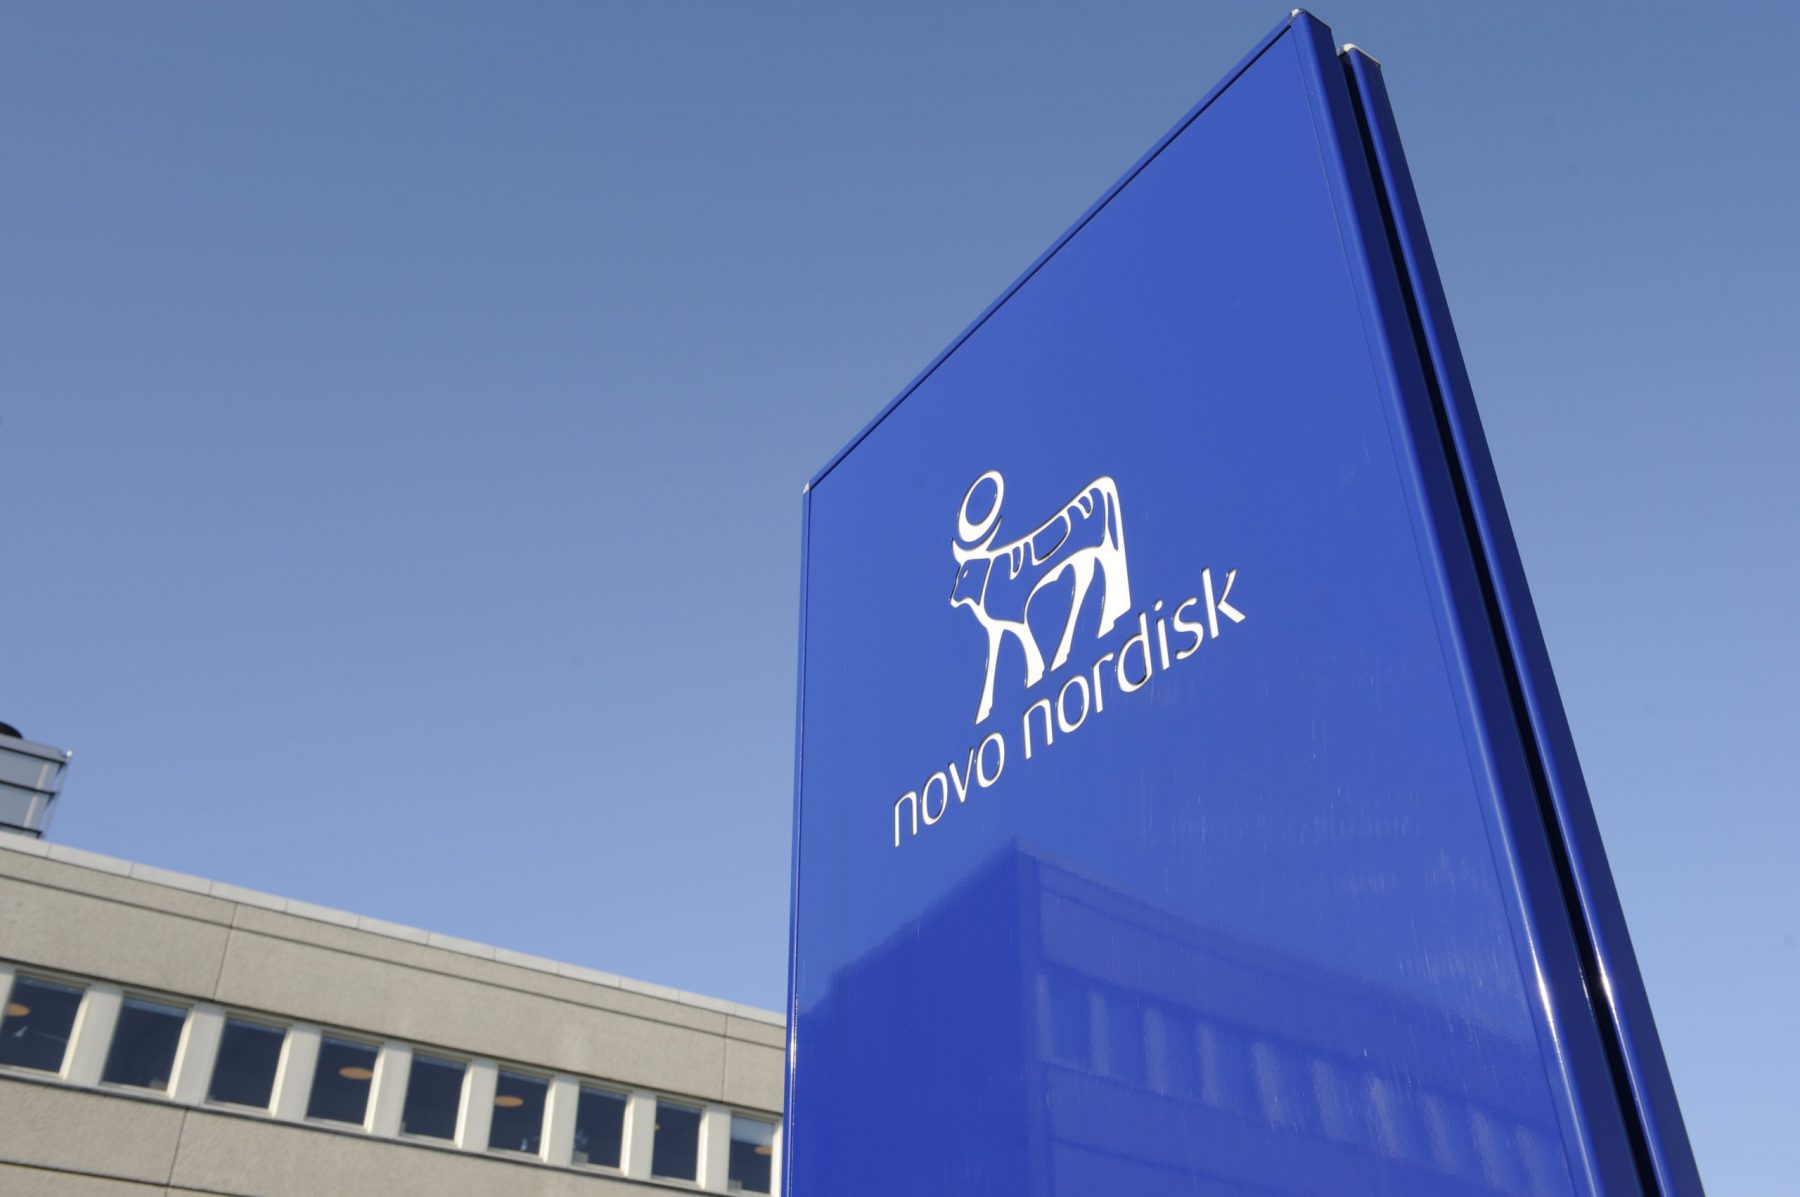 Novo Nordisk Hellas  ιστότοπος : Εγκαινιάζει το νέο εταιρικό ιστότοπο novonordiskgr